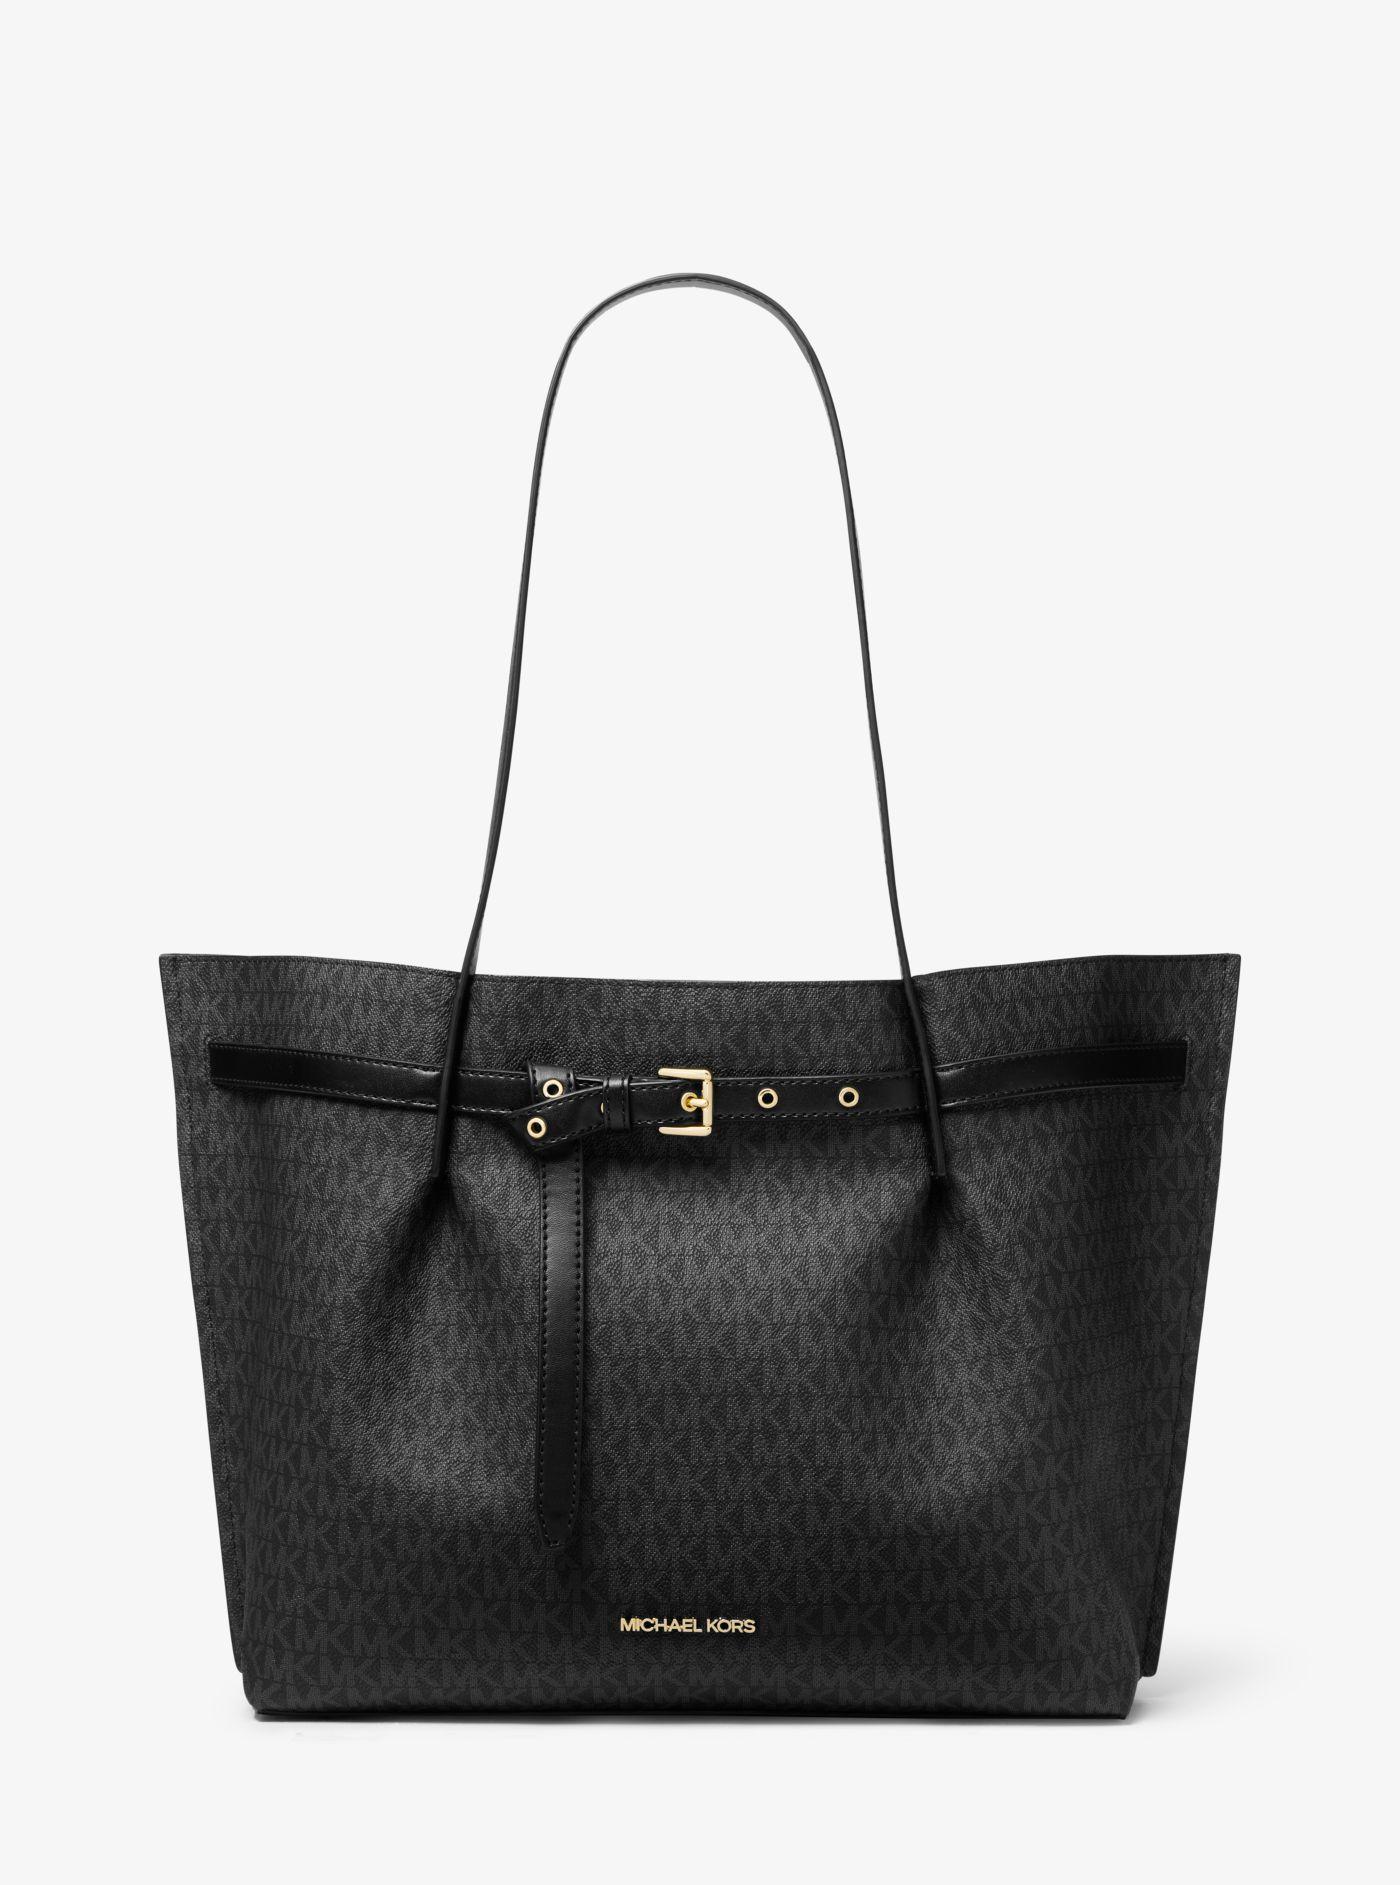 Michael Kors Emilia Large Logo Tote Bag in Black | Lyst Canada